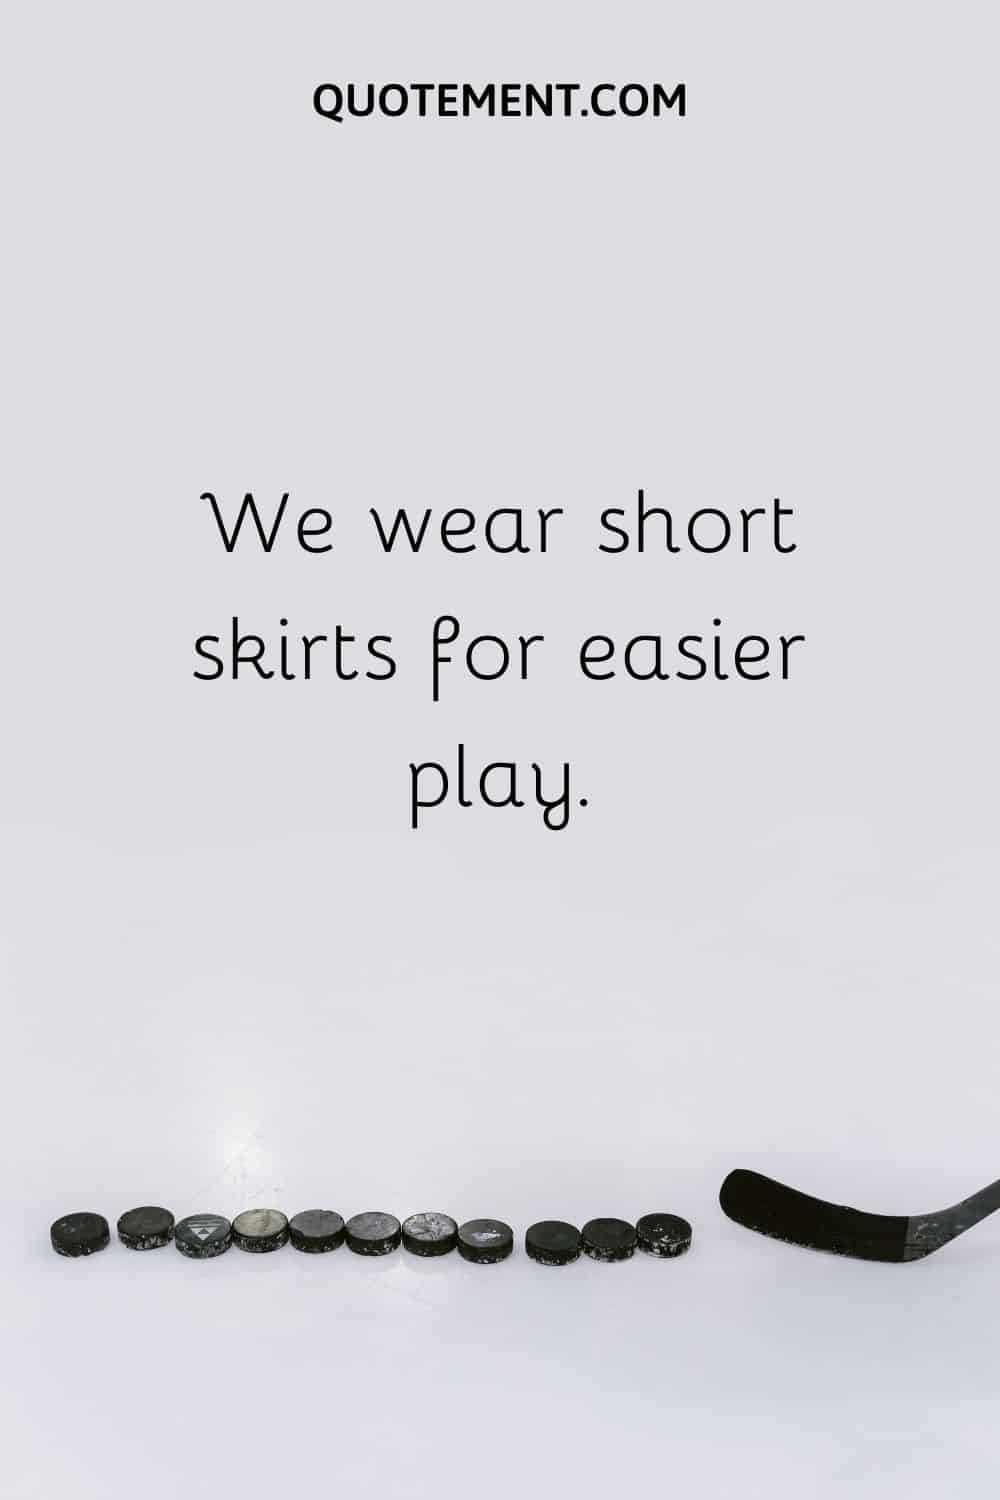 We wear short skirts for easier play.